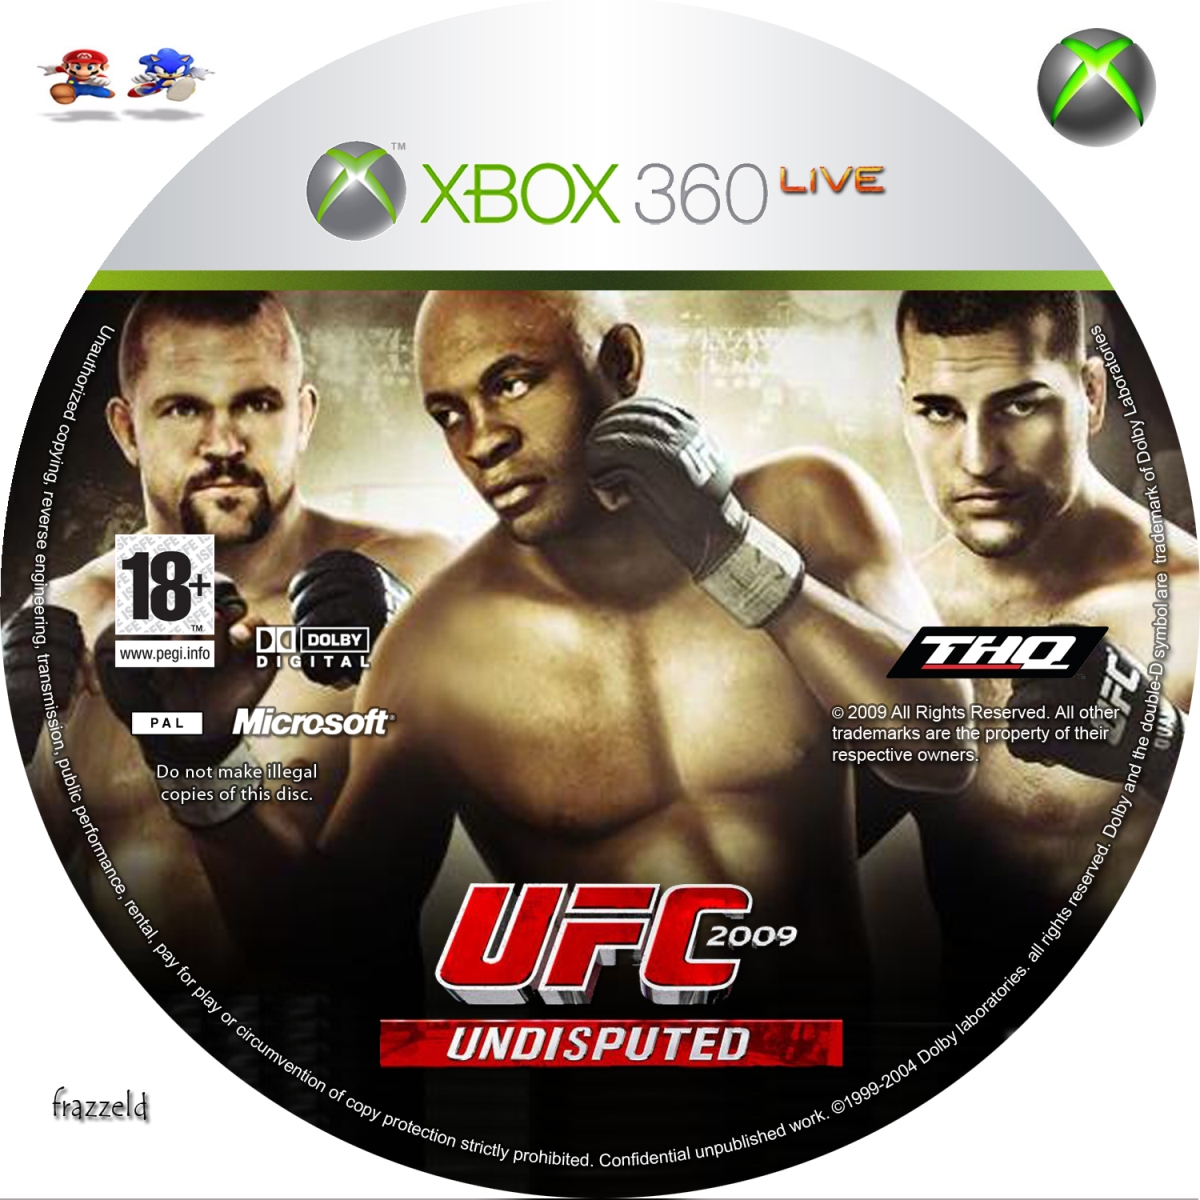 Xbox 360 год игры. UFC 2009 Undisputed Xbox 360. UFC 3 Undisputed Xbox 360 диск. Обложка УФС 3 Xbox 360. Диск для Xbox 360 UFC 2.